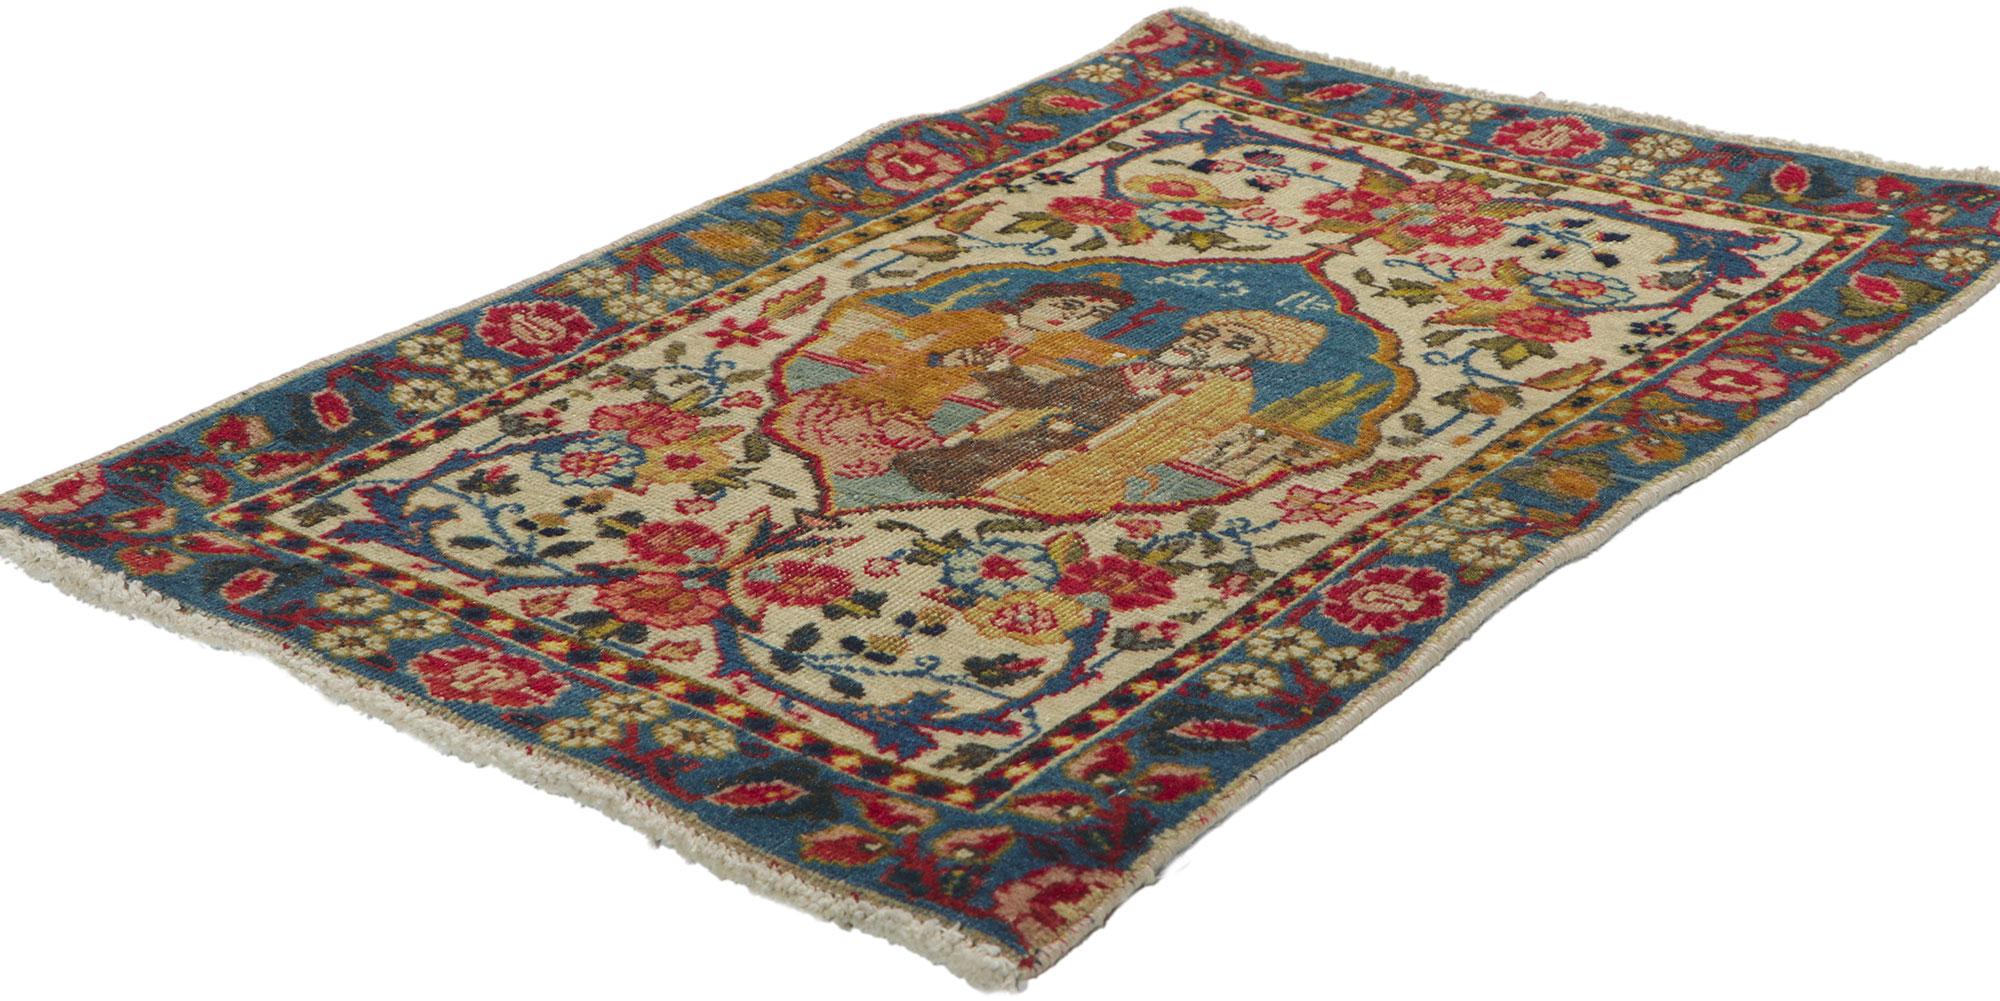 61064 Antique Persian Tabriz Pictorial rug, 01'08 x 02'06.